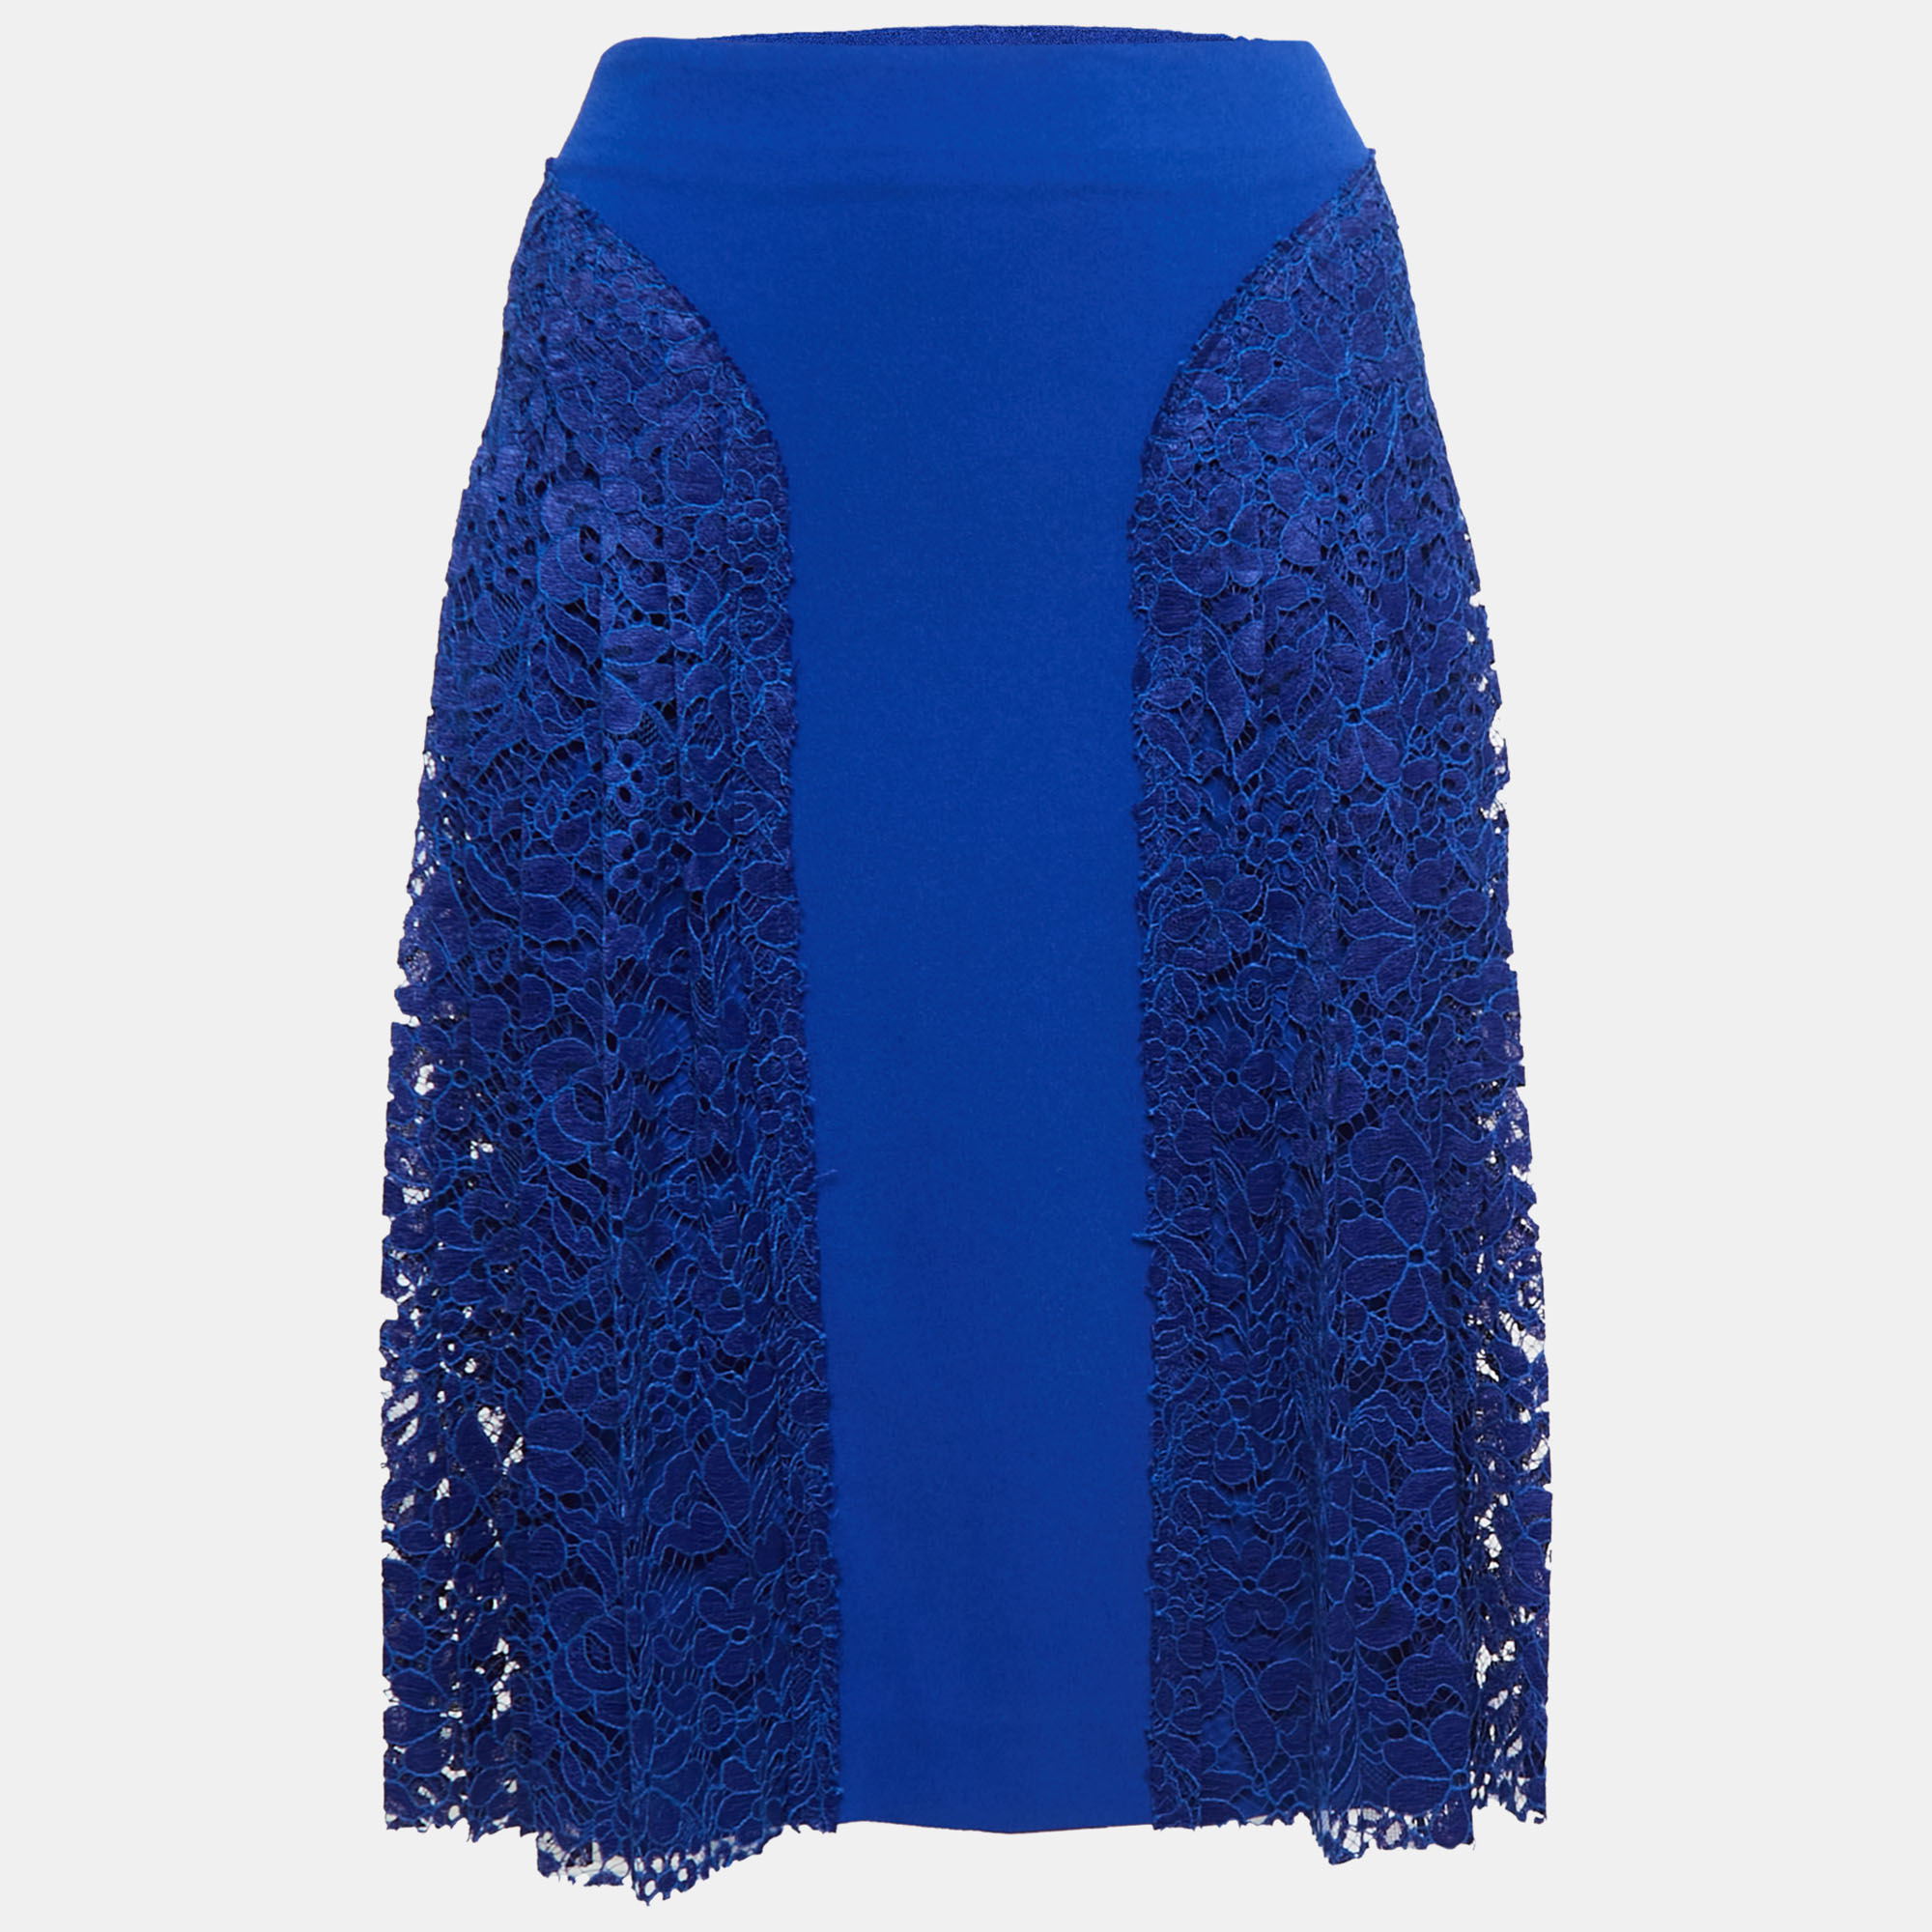 Joseph blue crepe & lace paneled skirt s